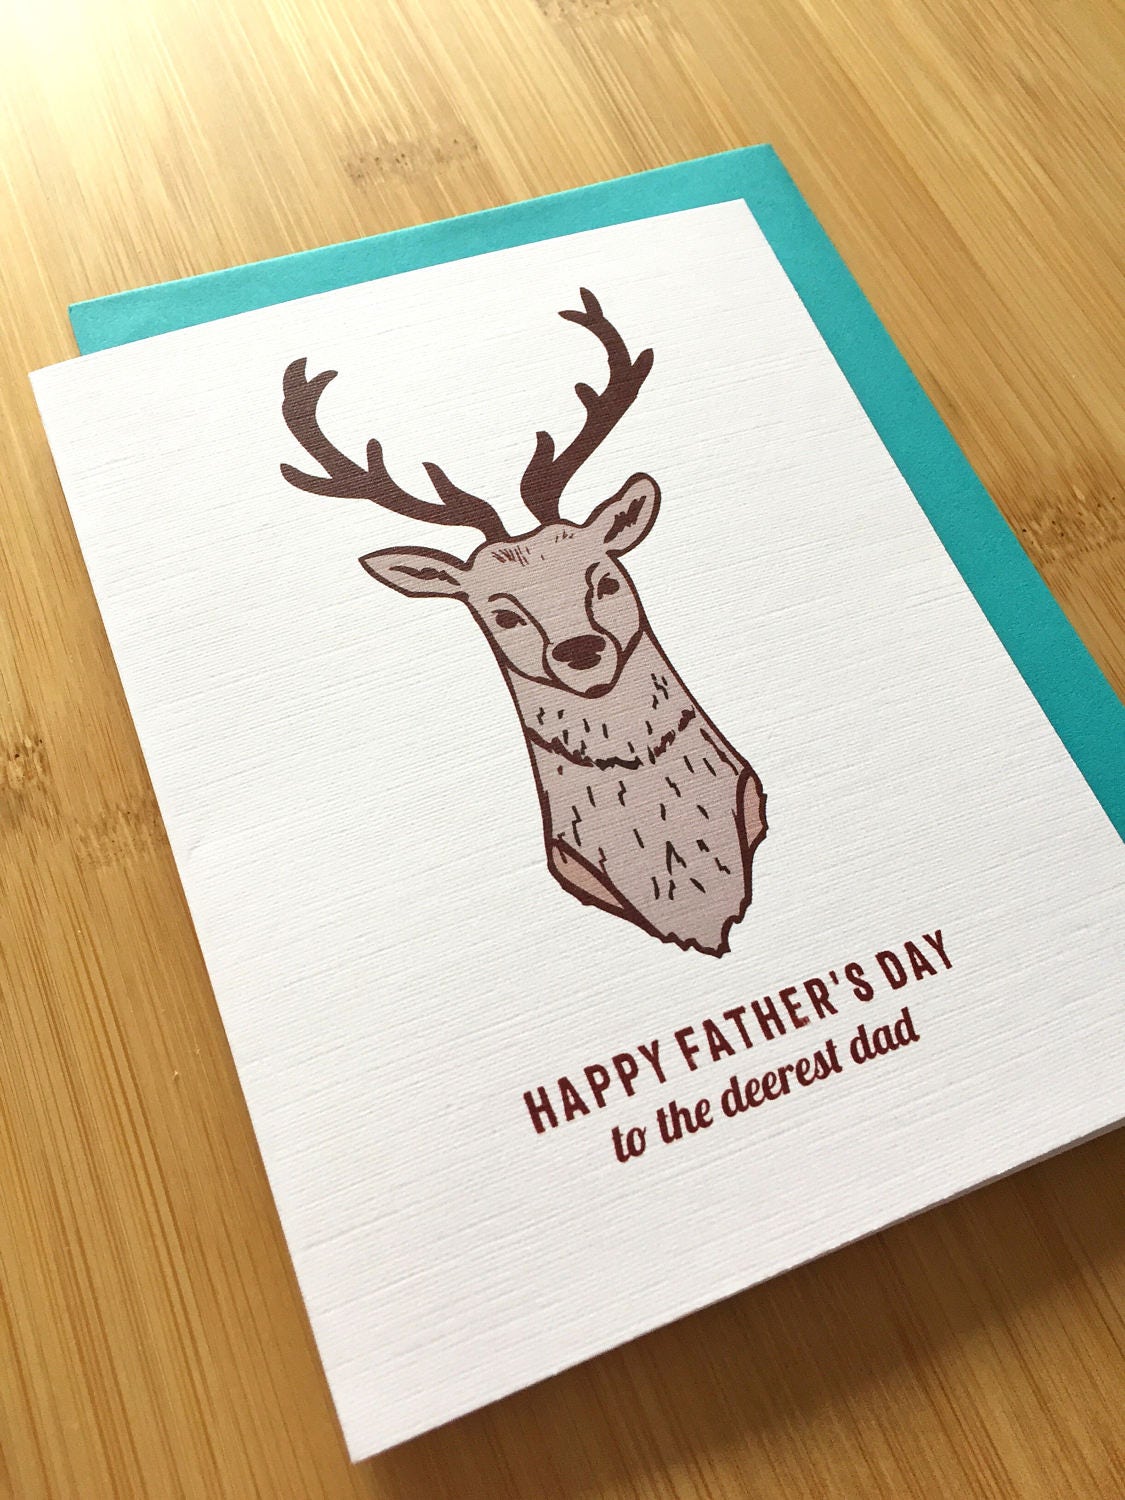 Fathers Day Deer Card - Card for Dad, Reindeer Dad Card, Papa Card, Fathers Day Gift, Deer Head Card, Deer Antler